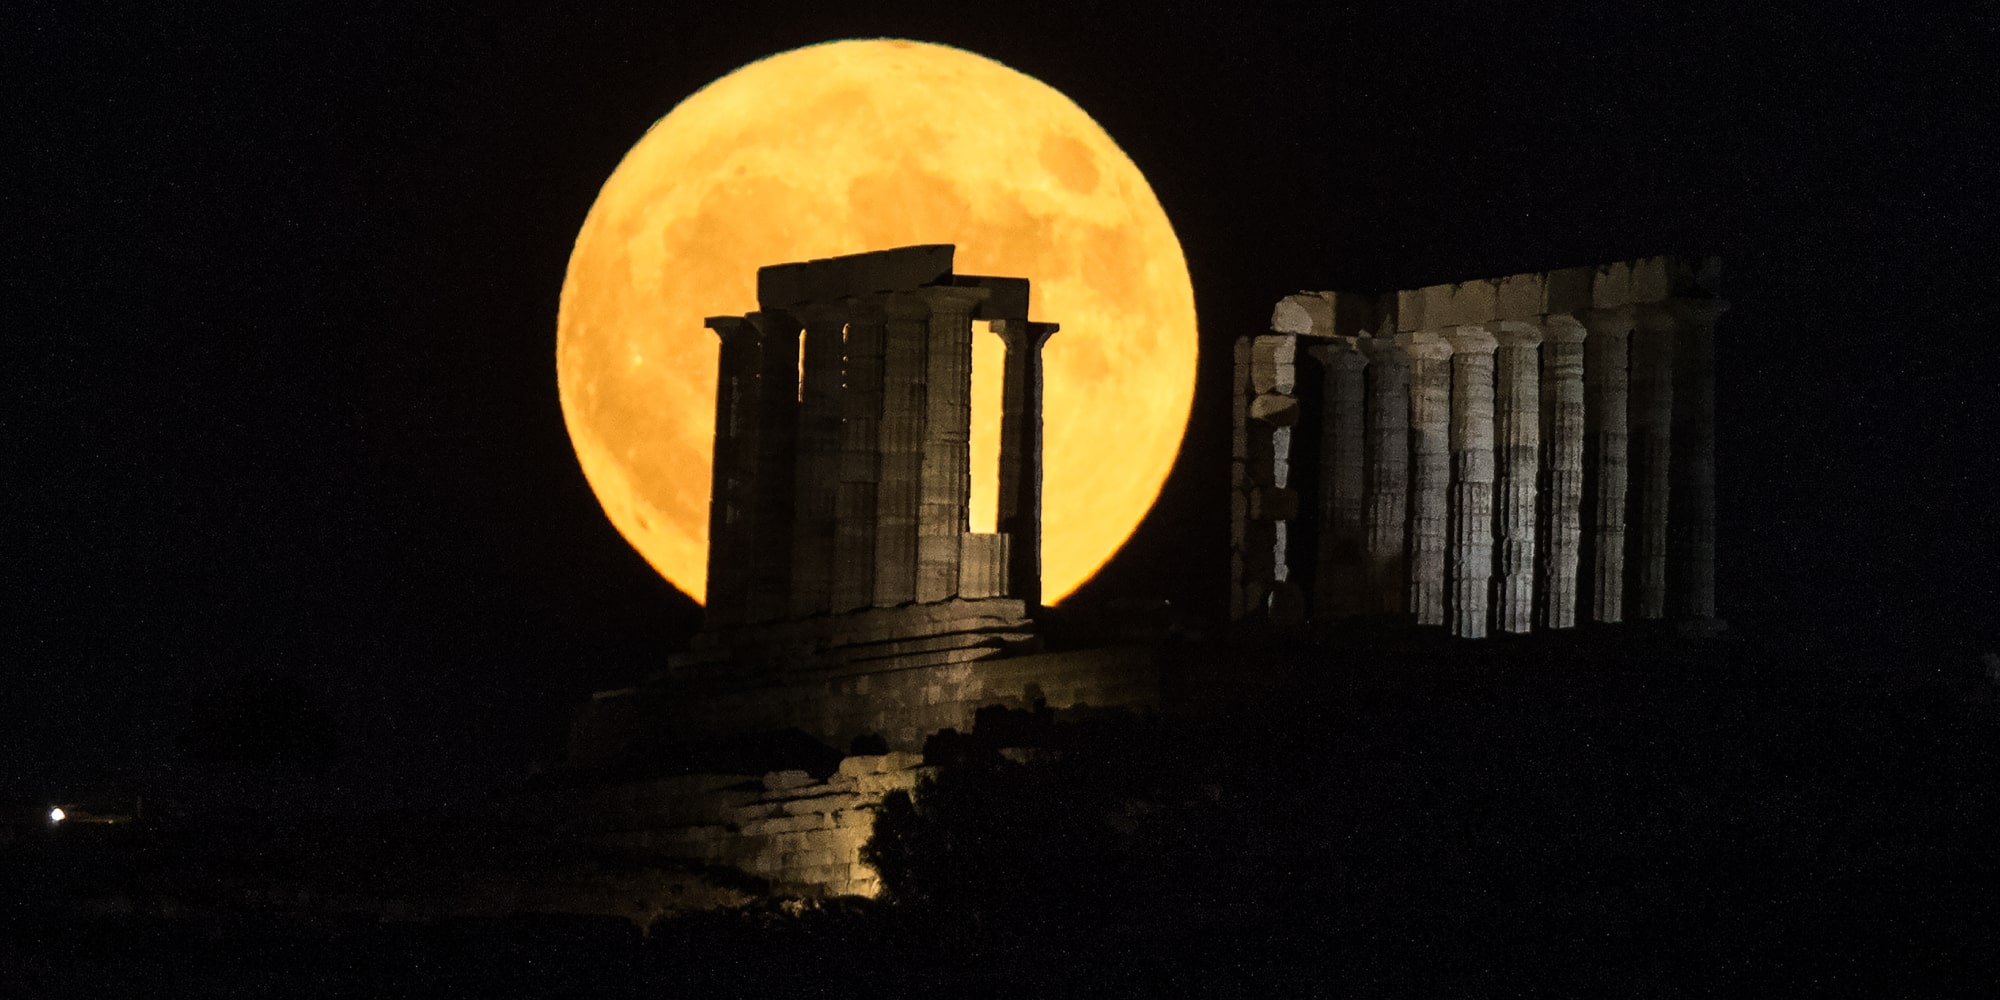 sounio yperpanselinos - Πέντε συγκλονιστικά κλικ από την υπερπανσέληνο του Αυγούστου: Από την Ακρόπολη μέχρι το Σούνιο, μάγεψε το «φεγγάρι του οξύρρυγχου»